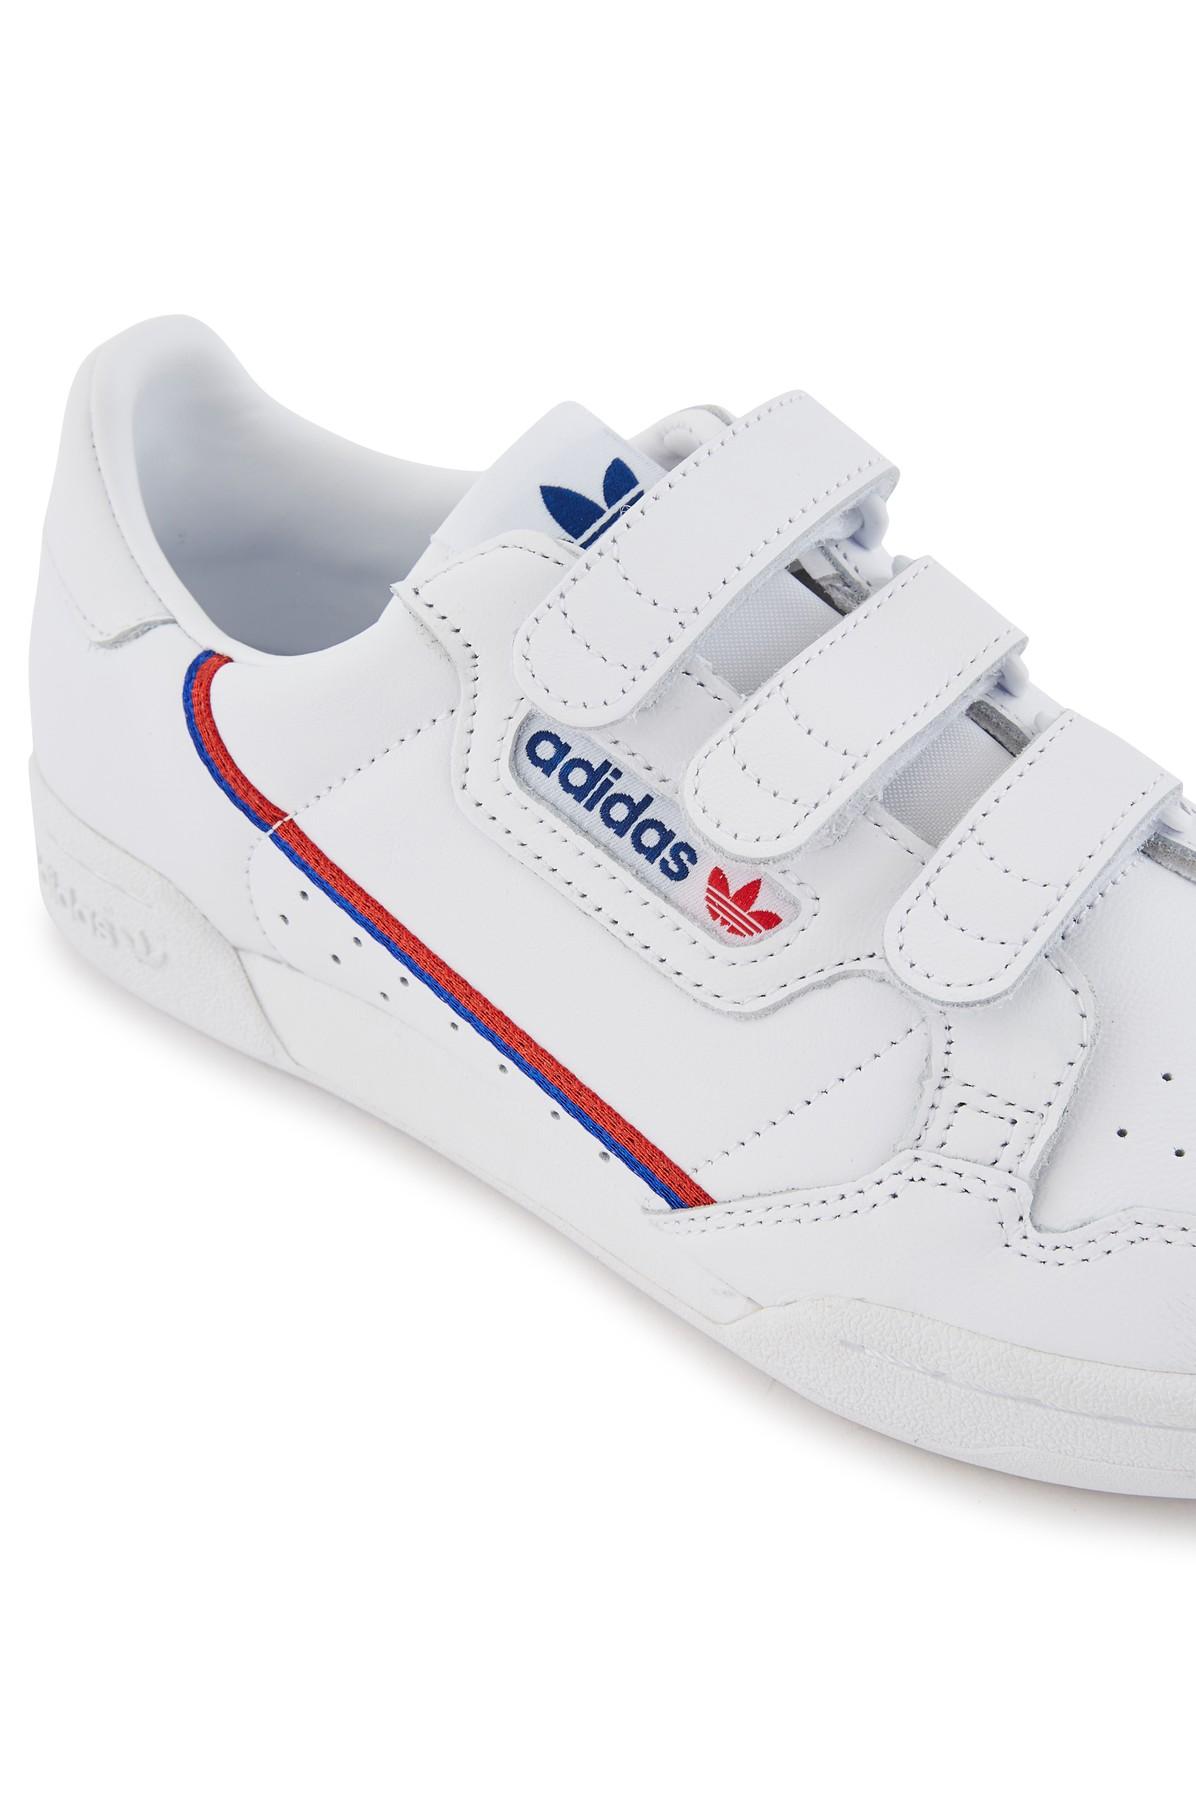 adidas Originals Denim Continental 80 Scratch Trainers in White - Lyst